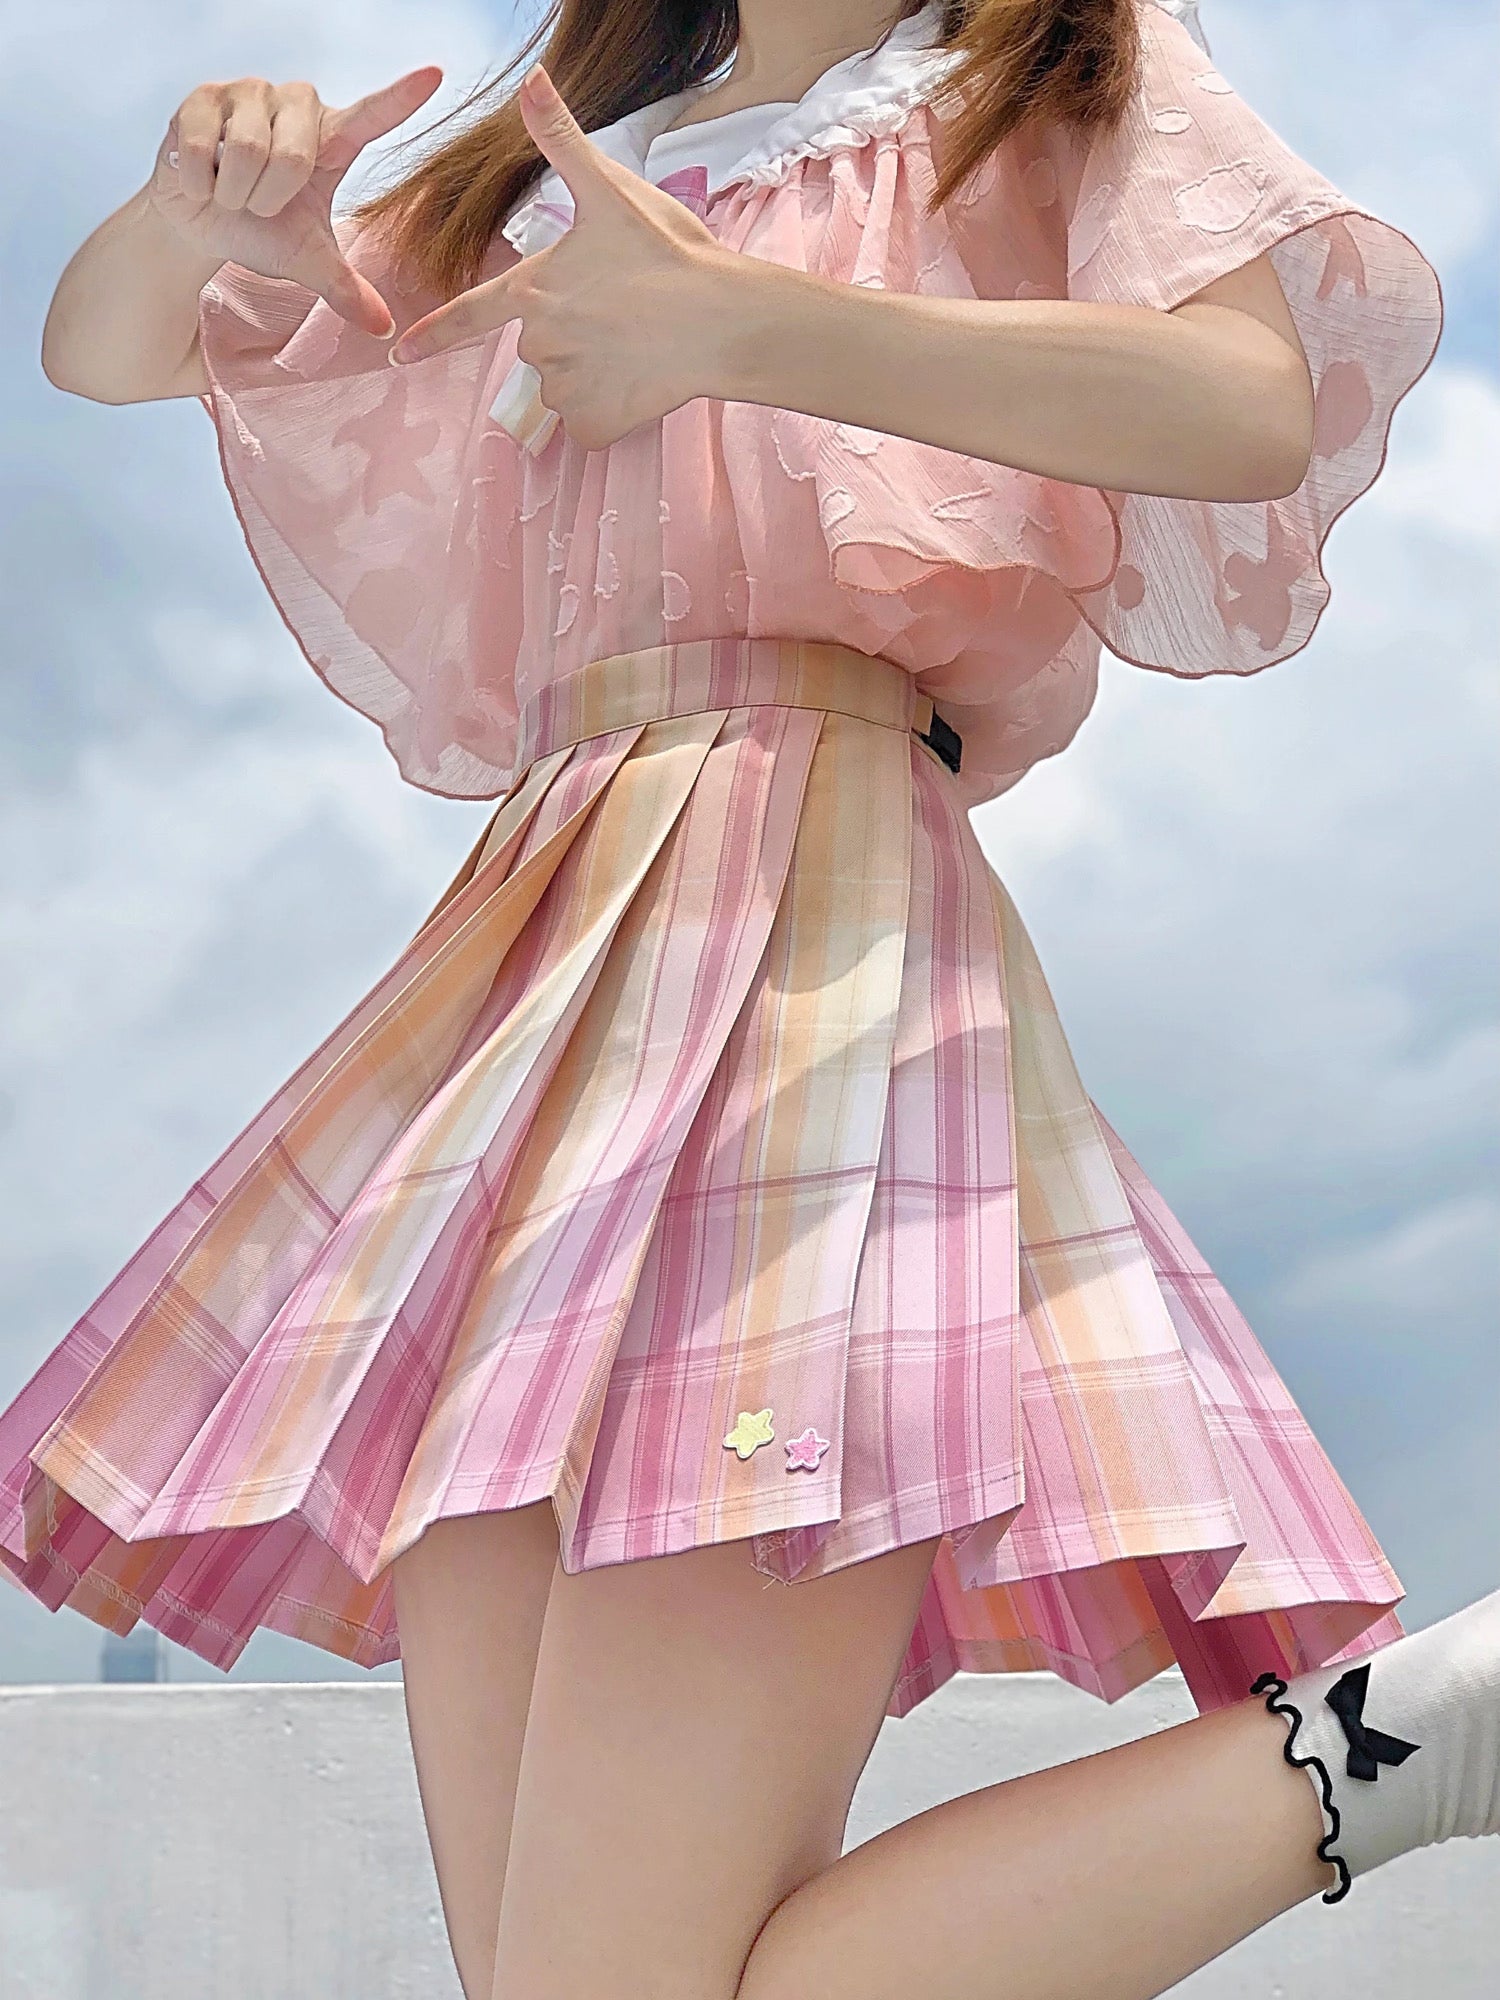 Seal Release JK Uniform Skirts-ntbhshop